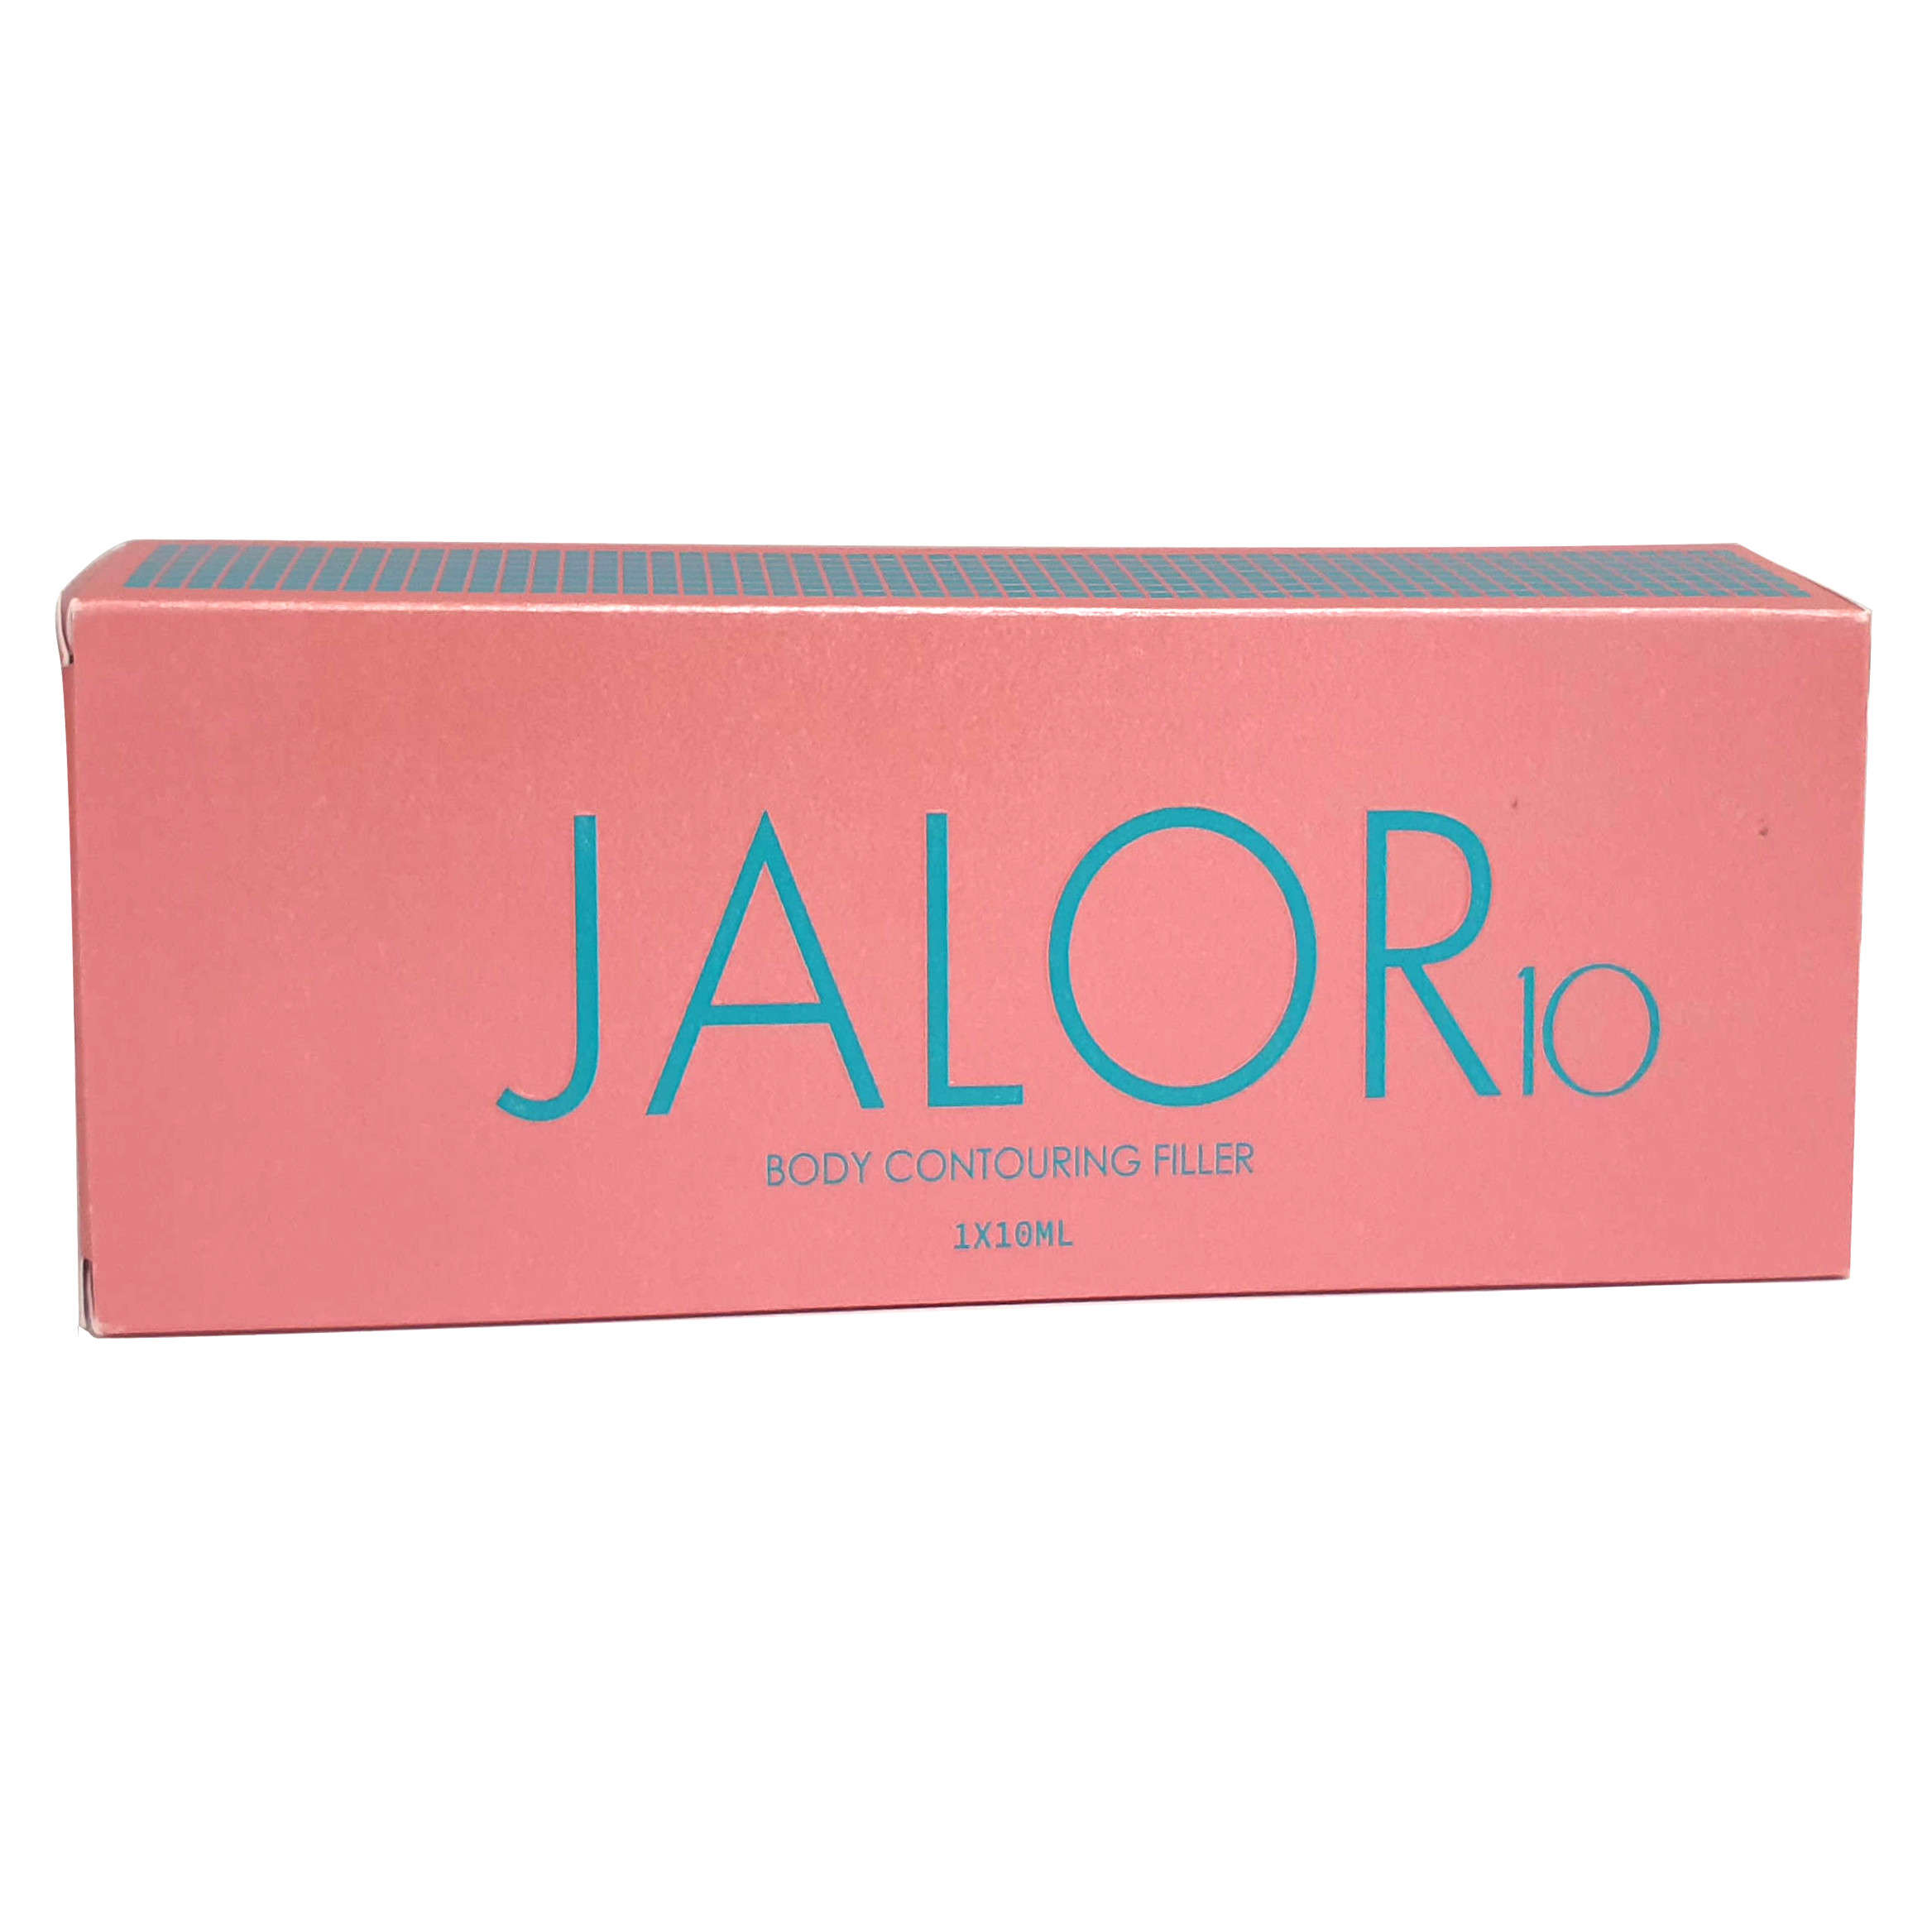 Jalor - Jalor 10 - Filler corpo